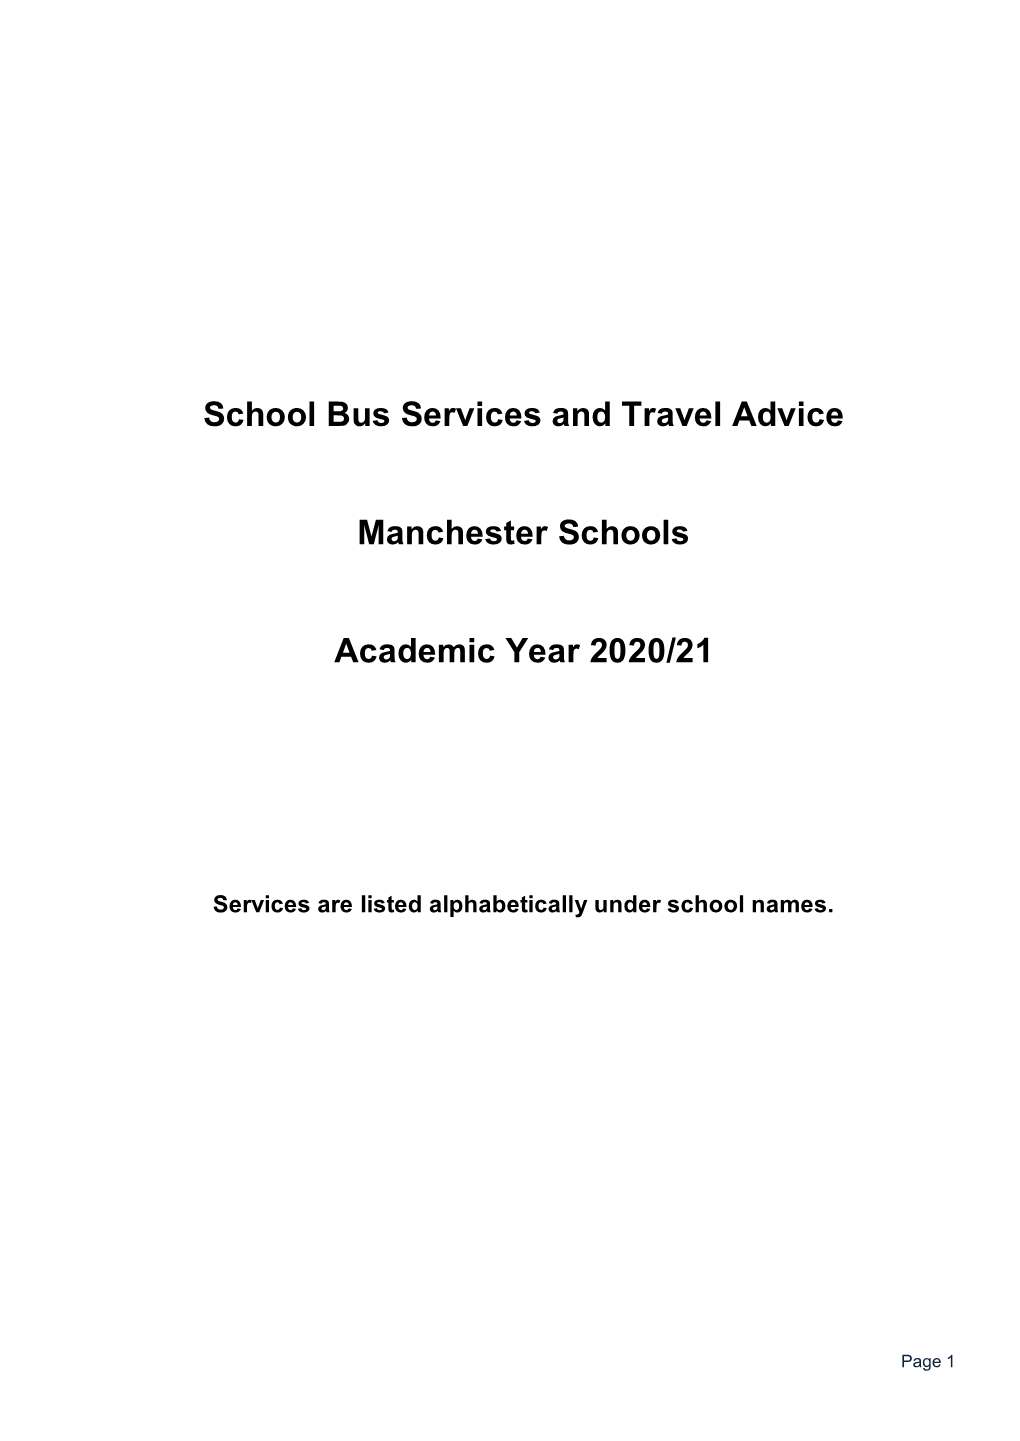 Manchester Schools 2020-21